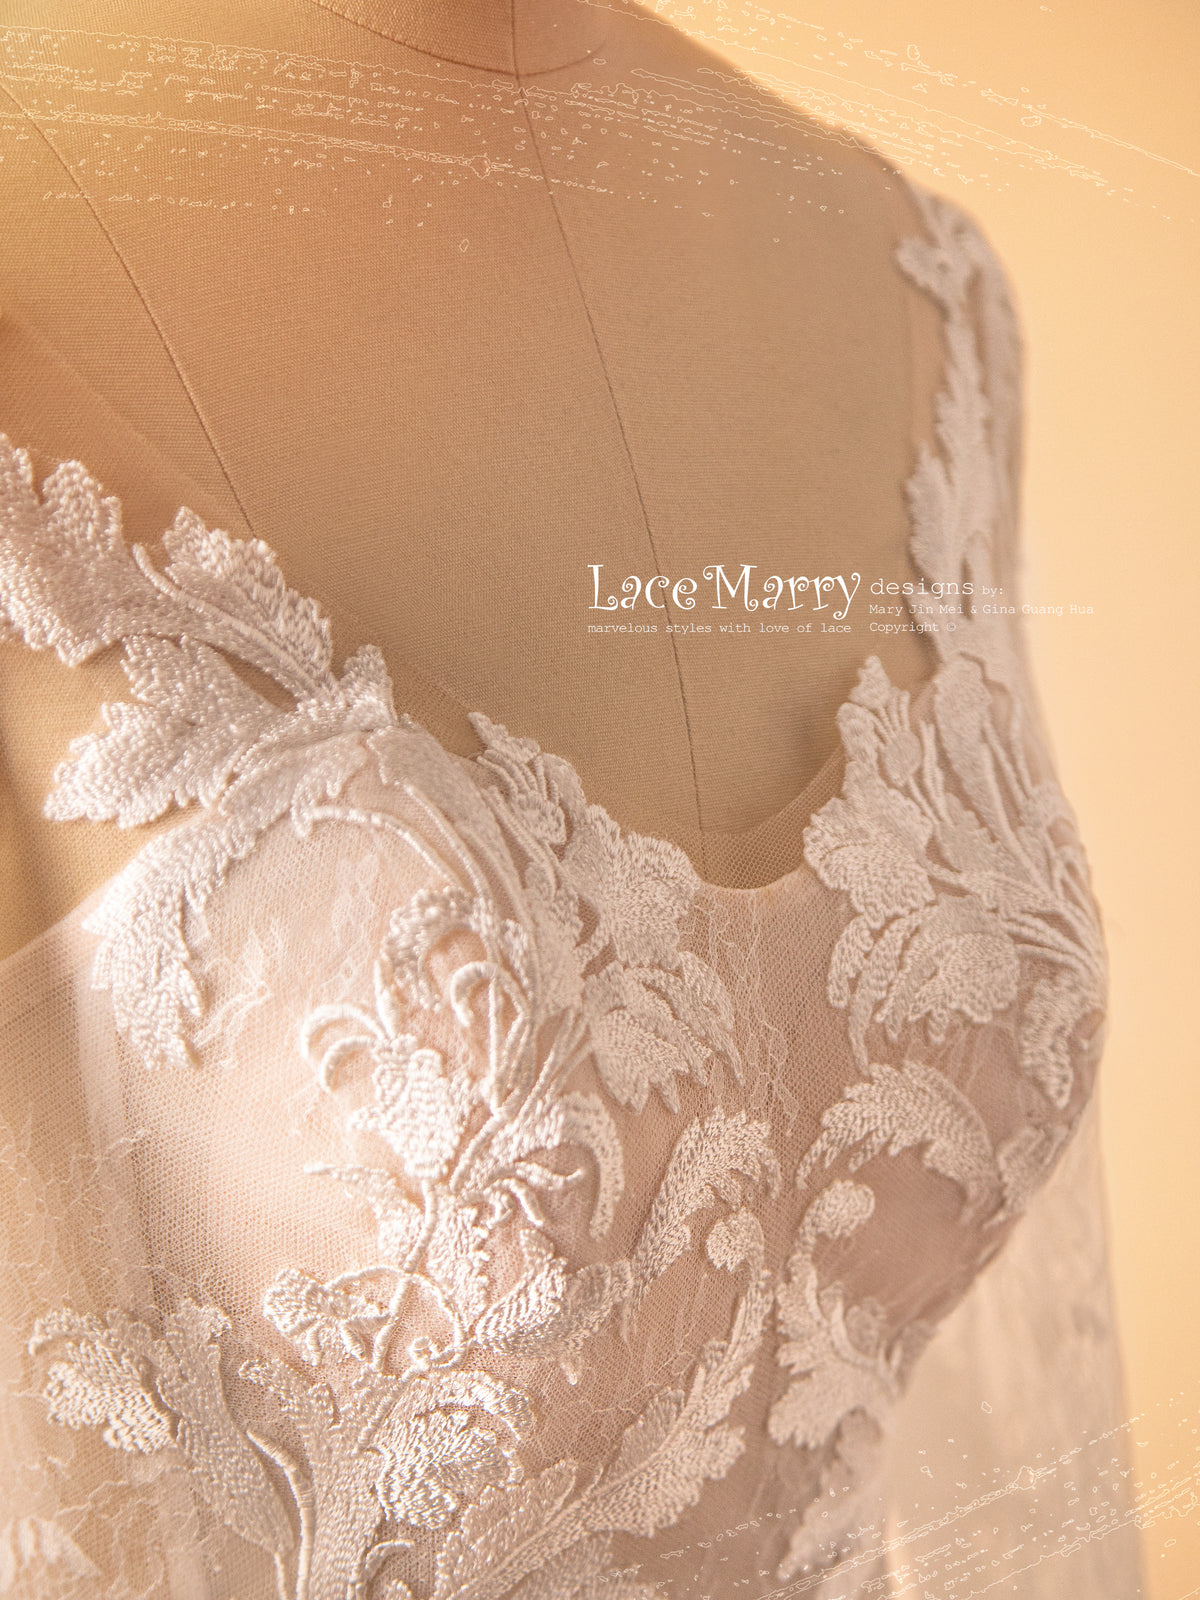 AMELIA / A-Line Wedding Dress with Long Sleeves